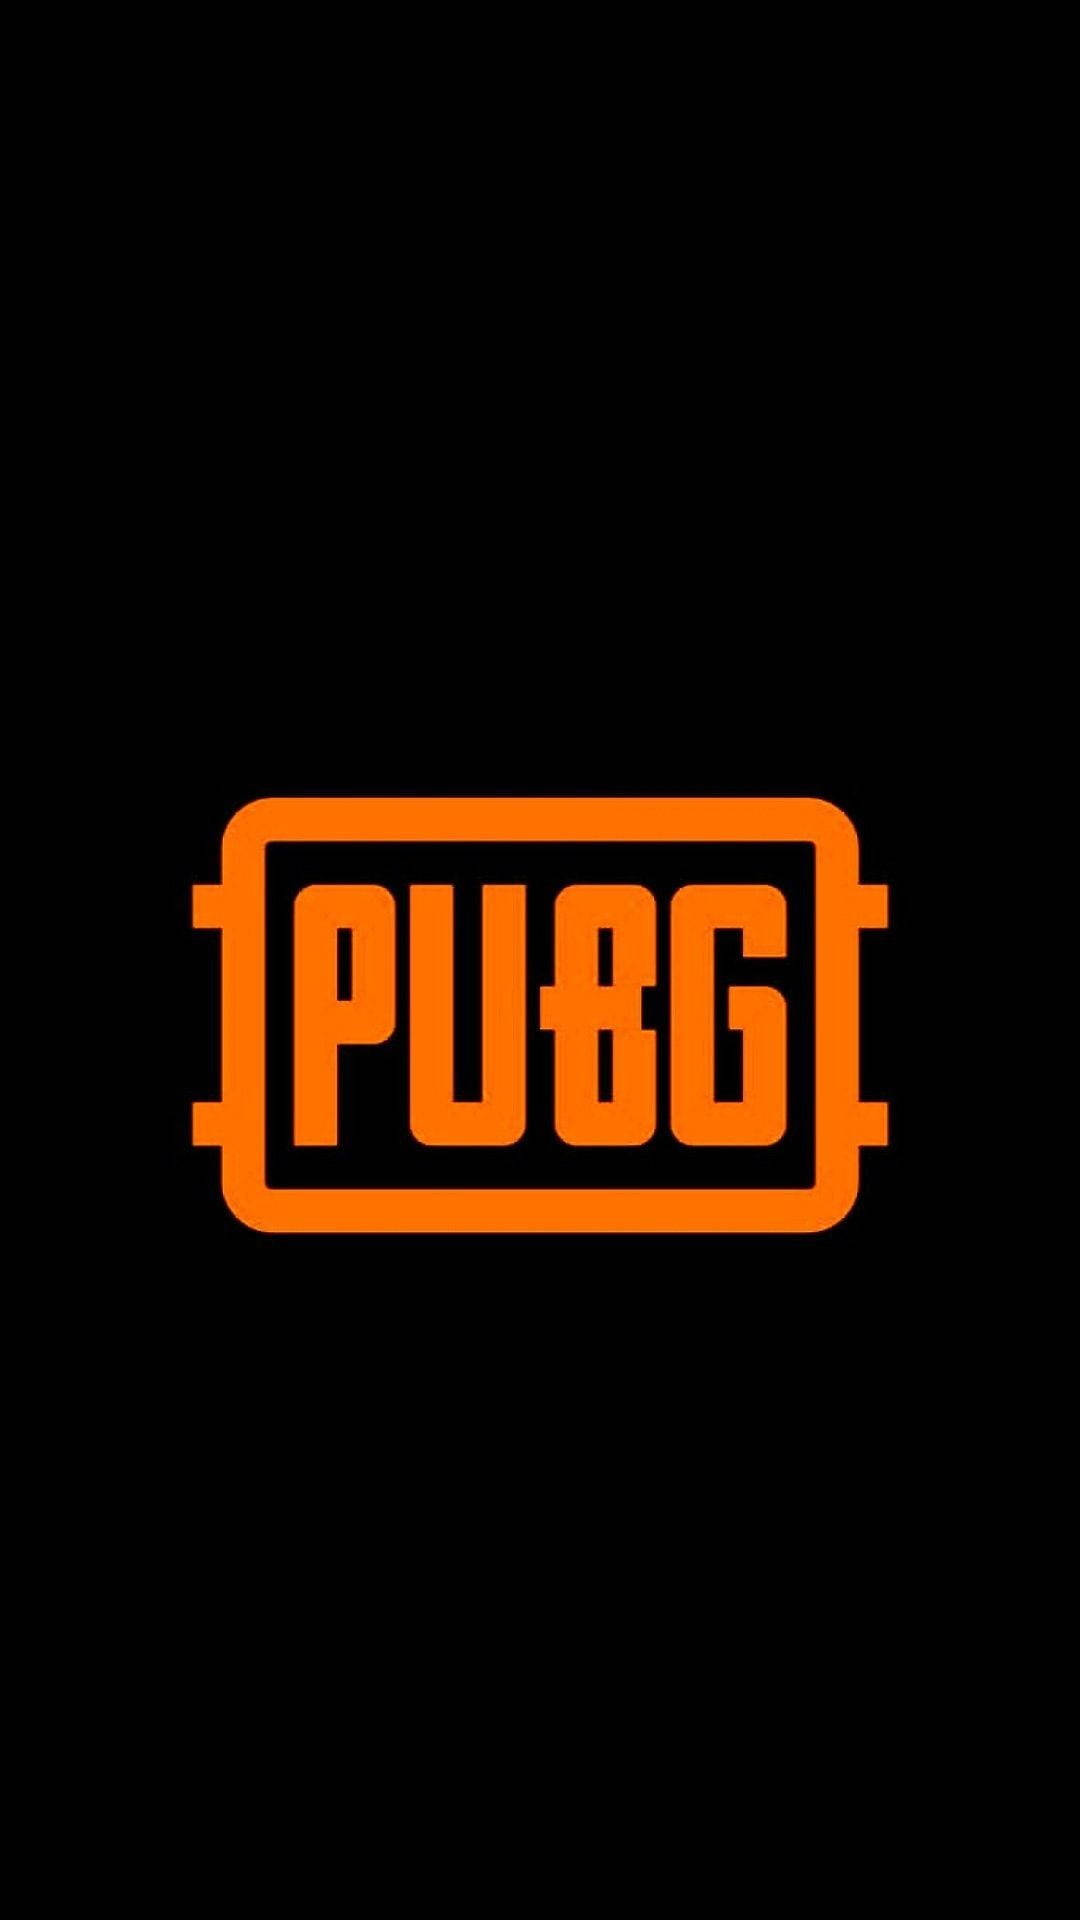 Free Pubg Logo Wallpaper Downloads, [100+] Pubg Logo Wallpapers for FREE |  